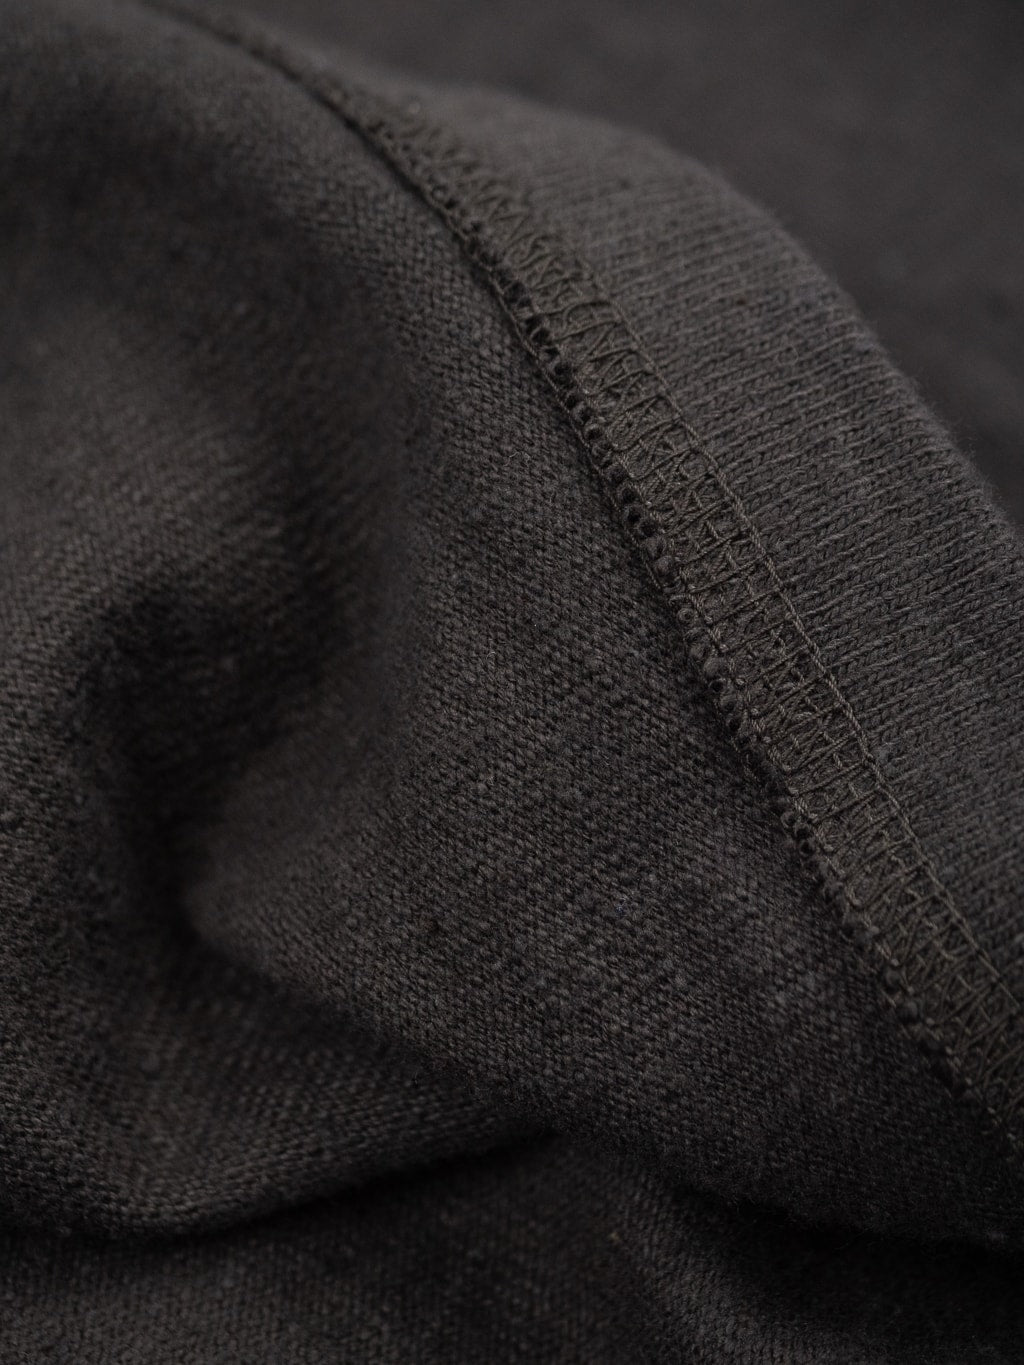 samurai jeans japanese cotton slub tshirt henley kuromame texture